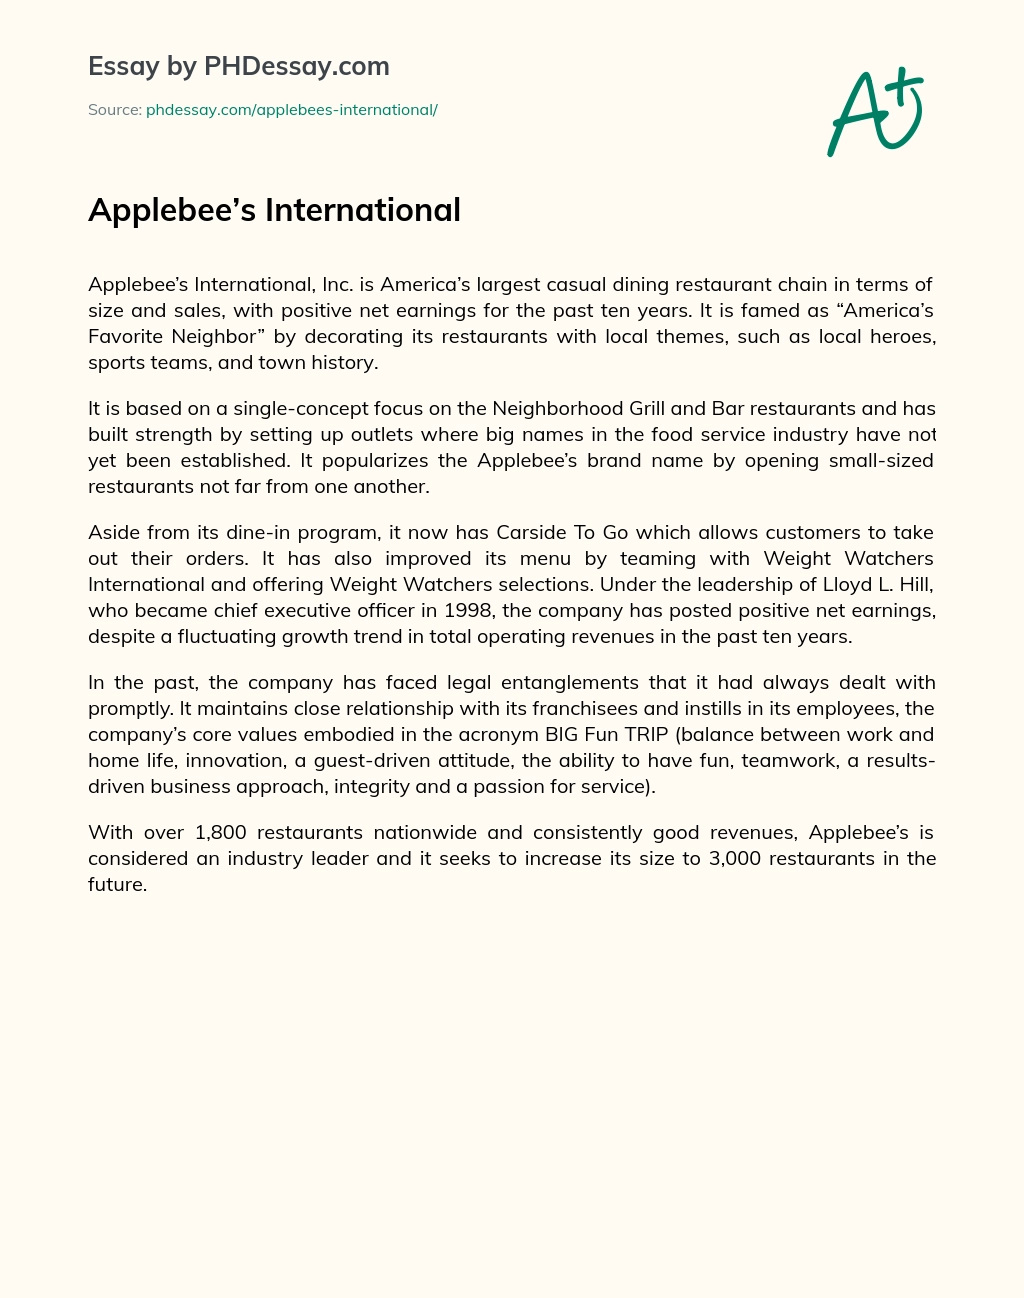 Applebee’s International essay